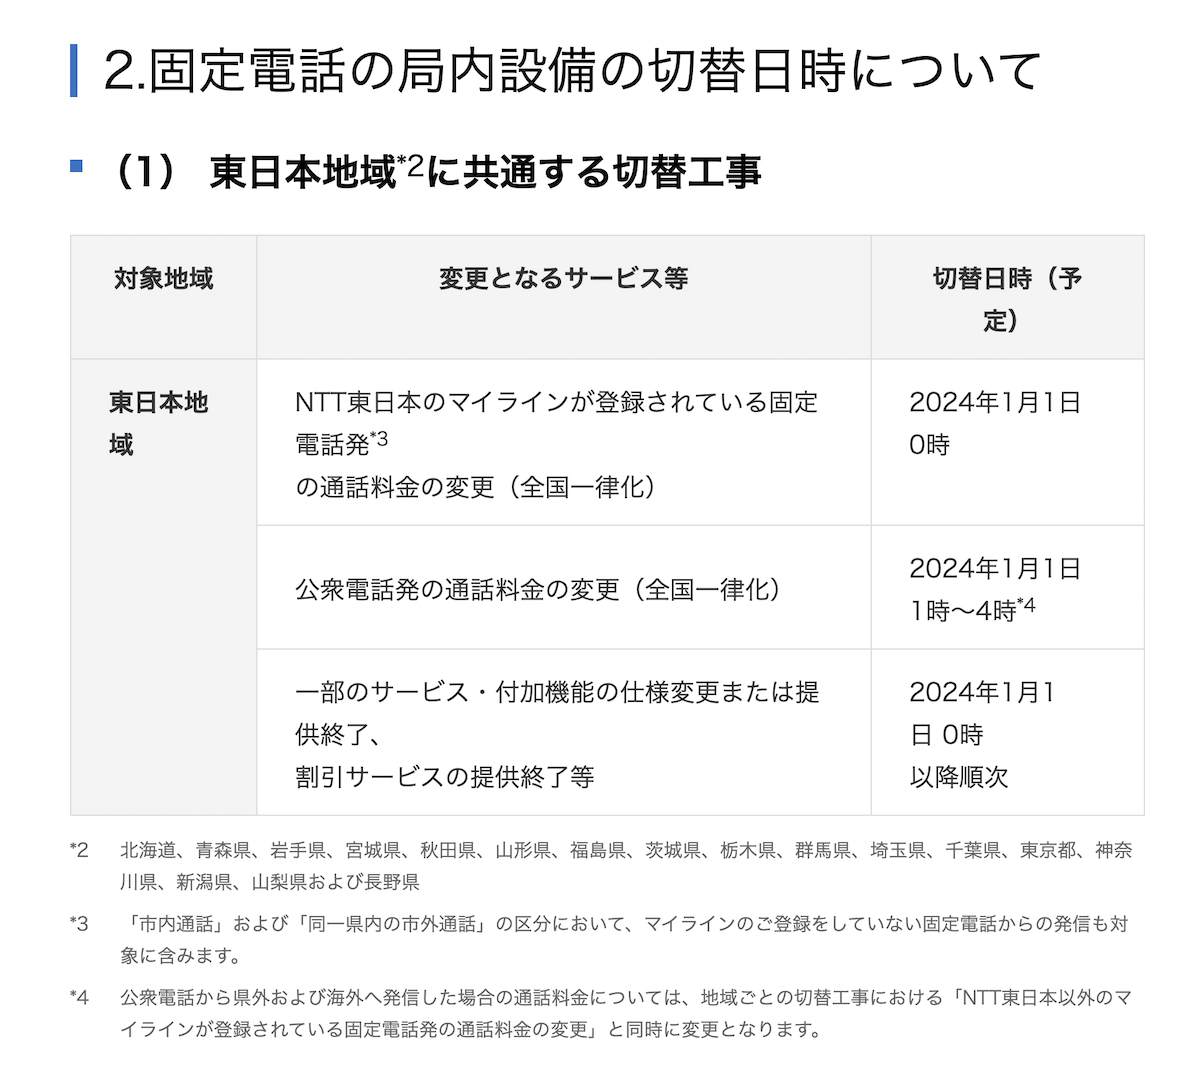 NTT東日本管内の移行スケジュール